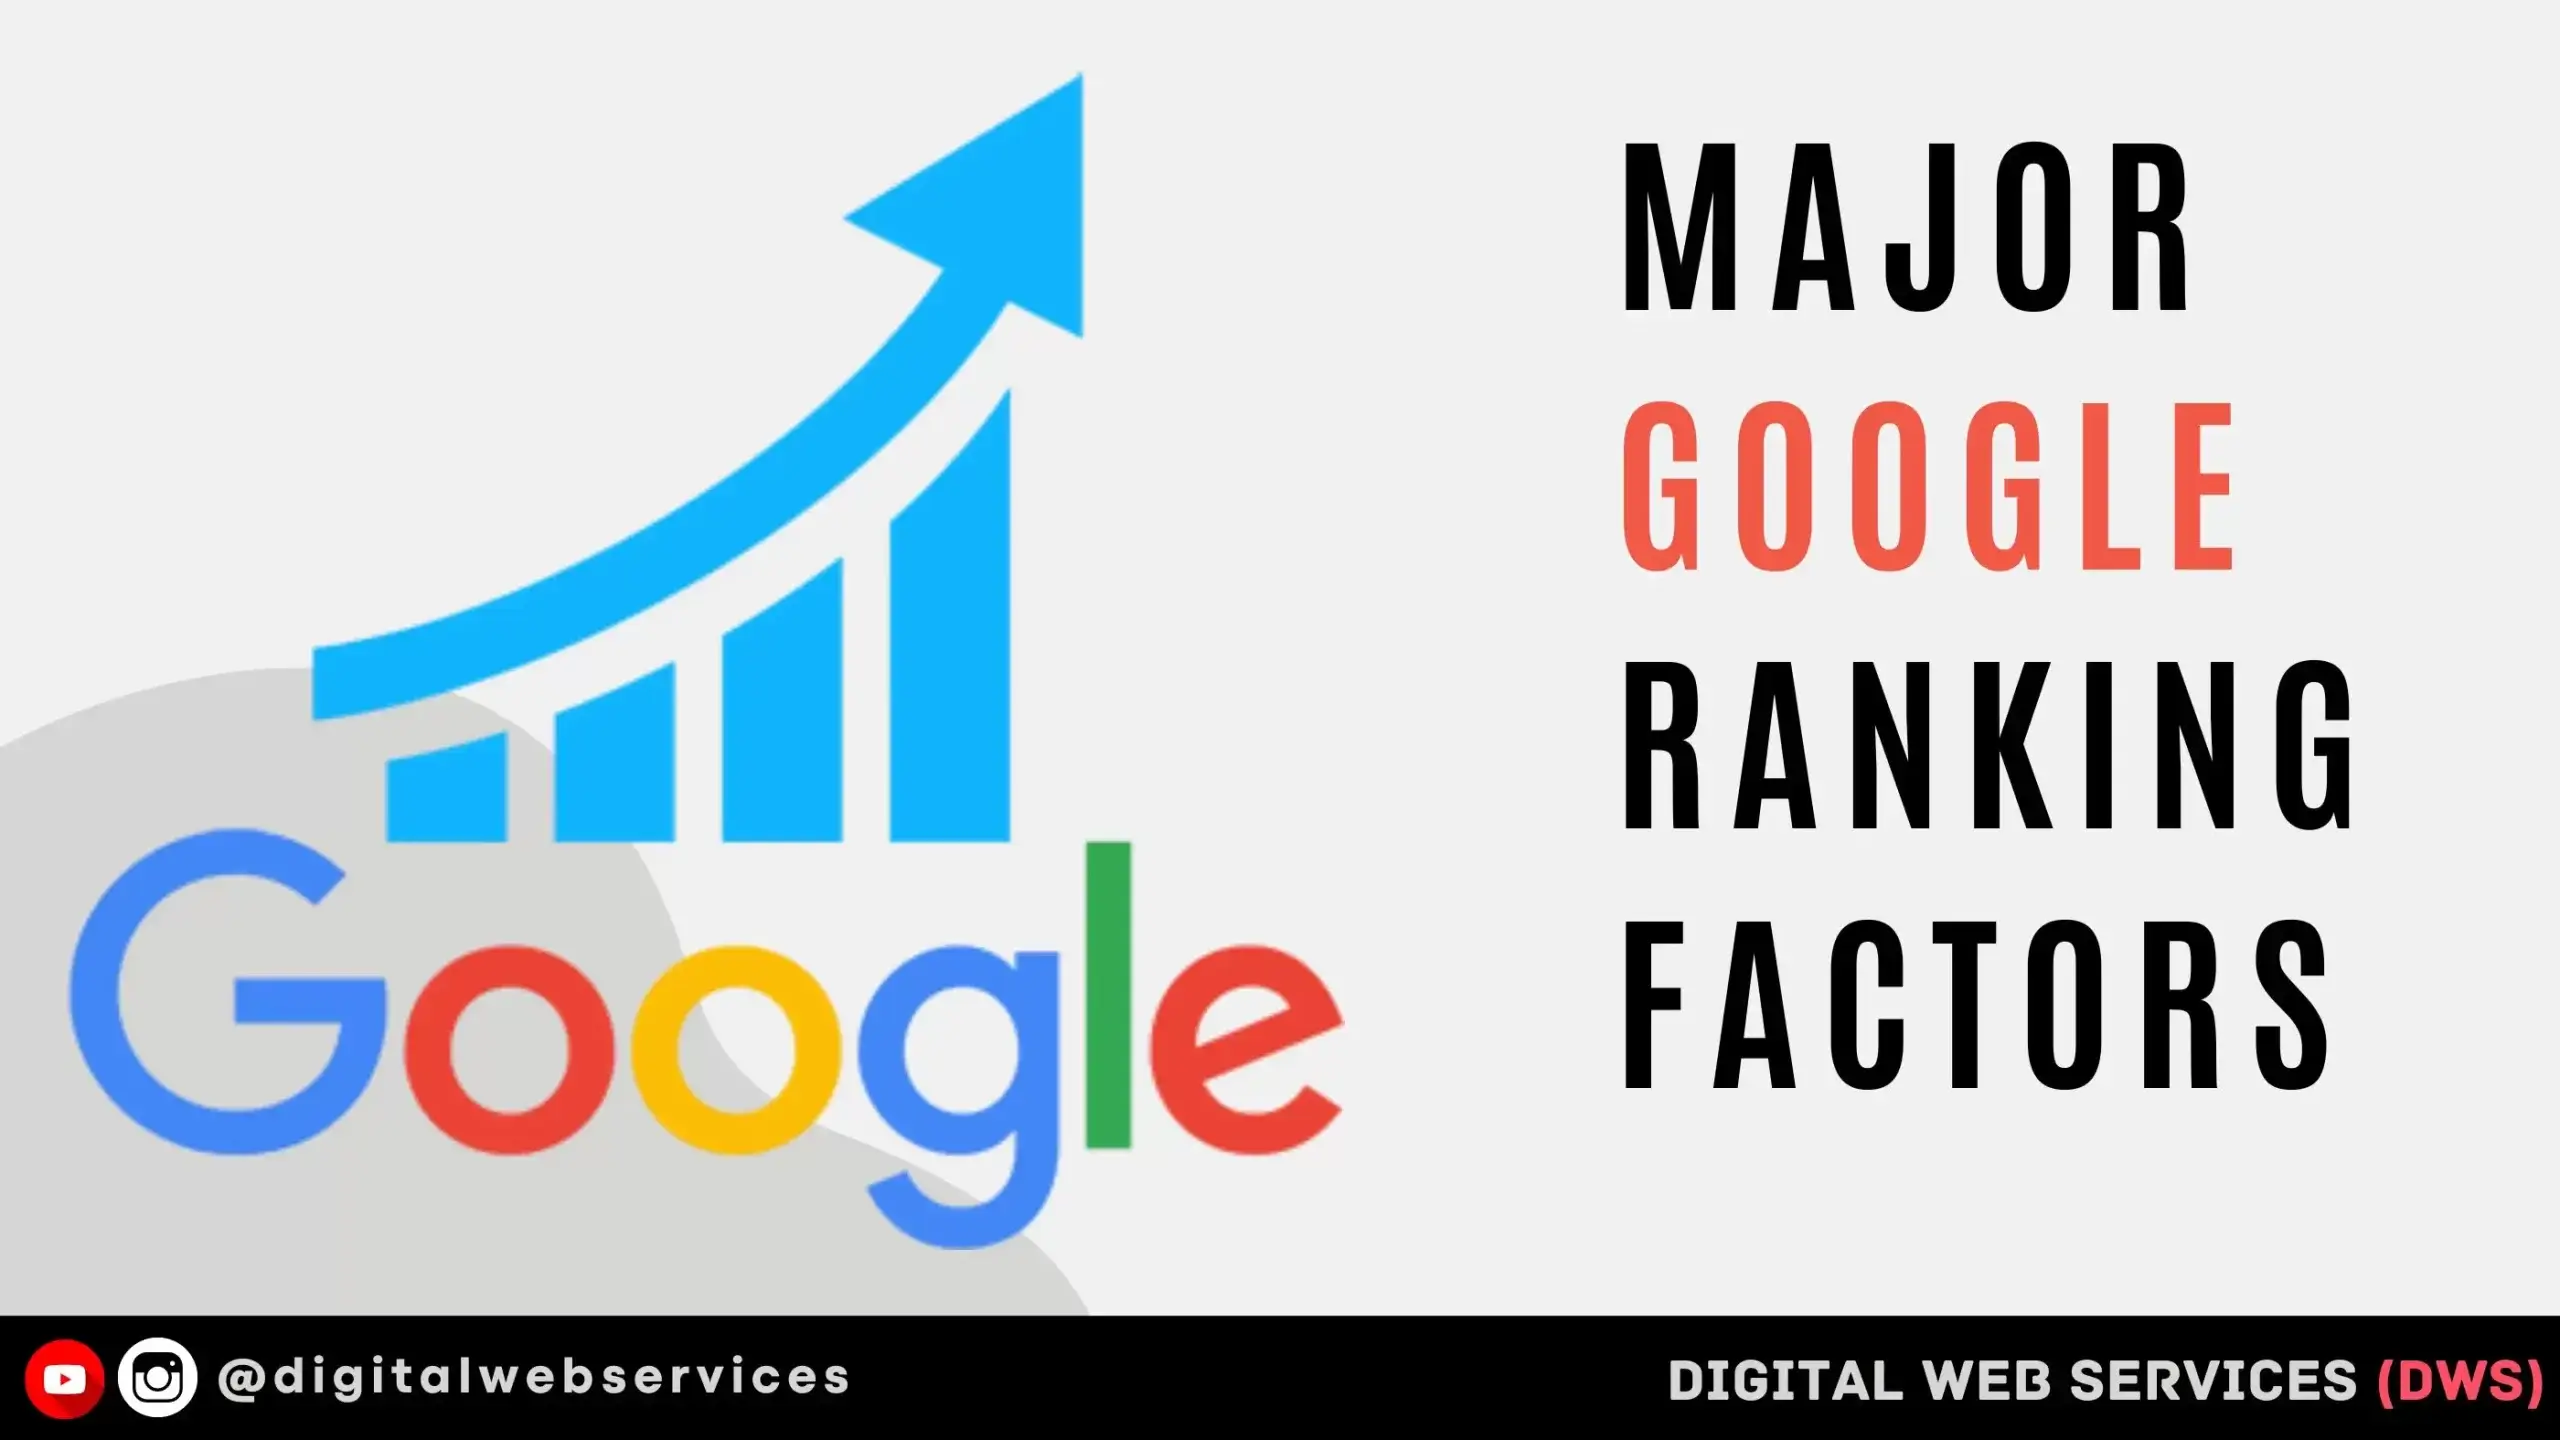 Major Google Ranking Factors